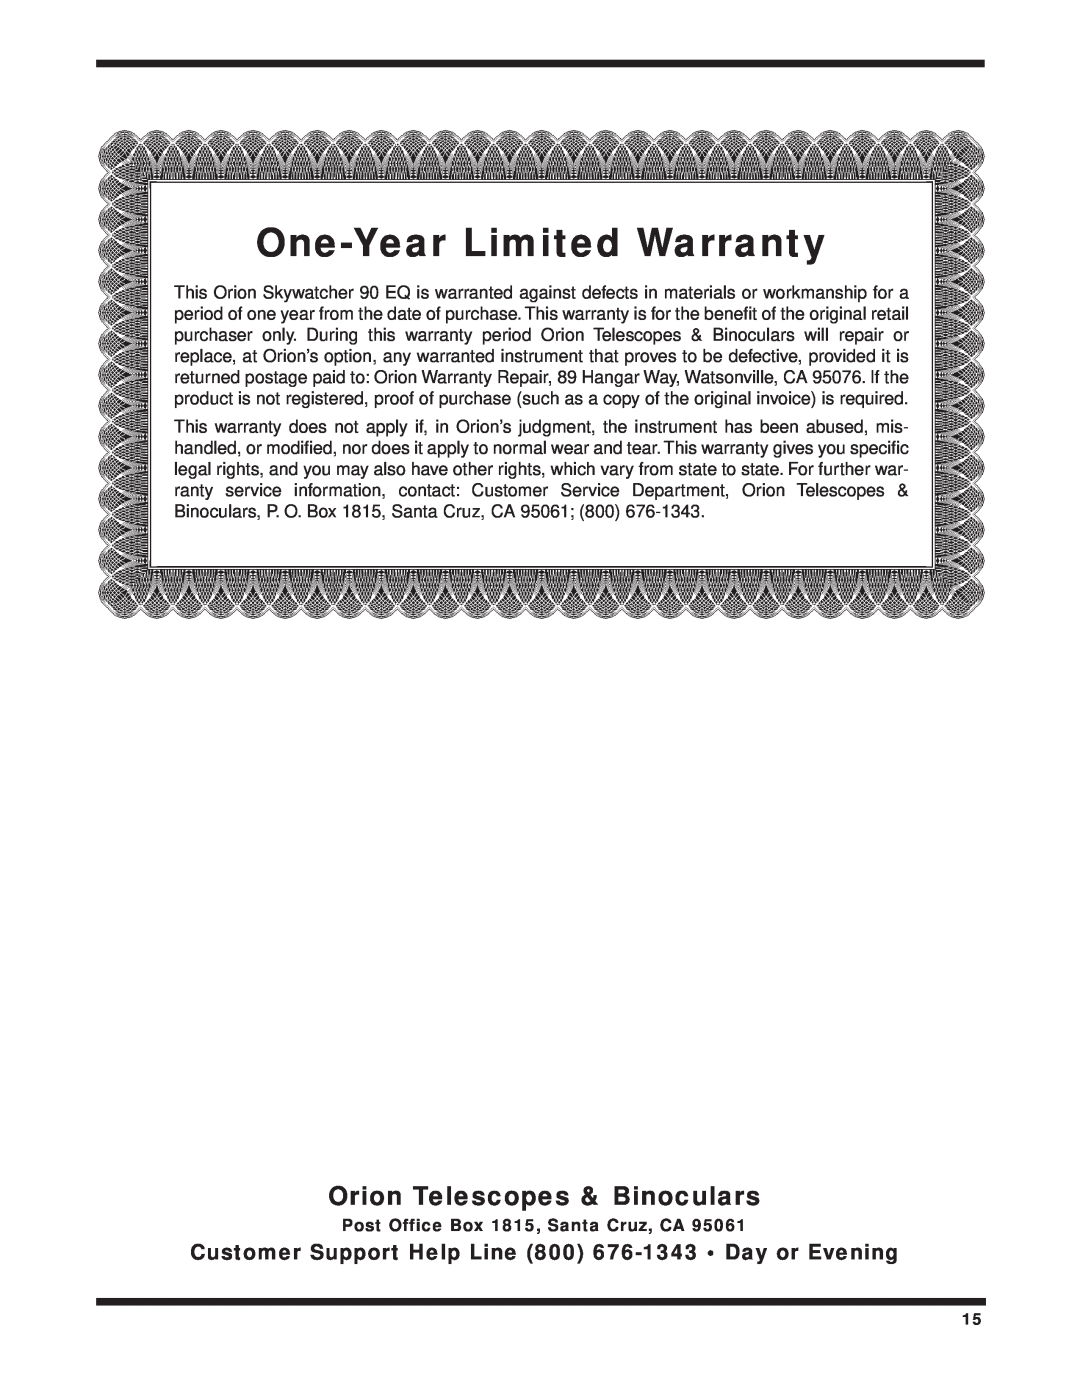 Orion 9025, 9086, 9024 One-Year Limited Warranty, Orion Telescopes & Binoculars, Post Office Box 1815, Santa Cruz, CA 